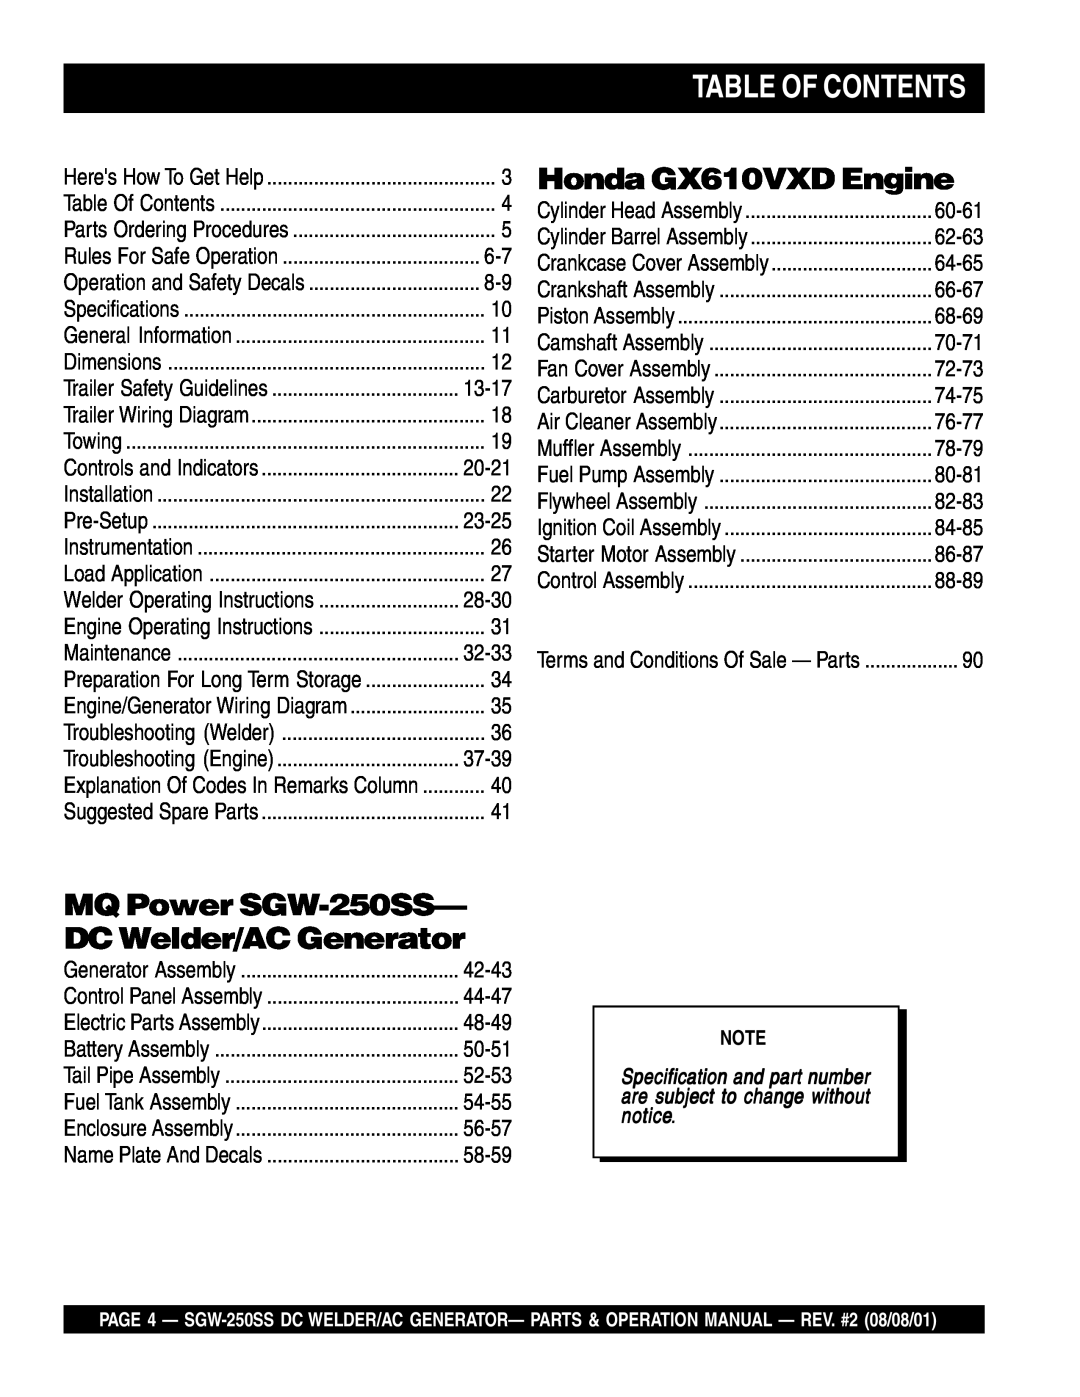 Multiquip operation manual Table Of Contents, Honda GX610VXD Engine, MQ Power SGW-250SS-DC Welder/AC Generator 